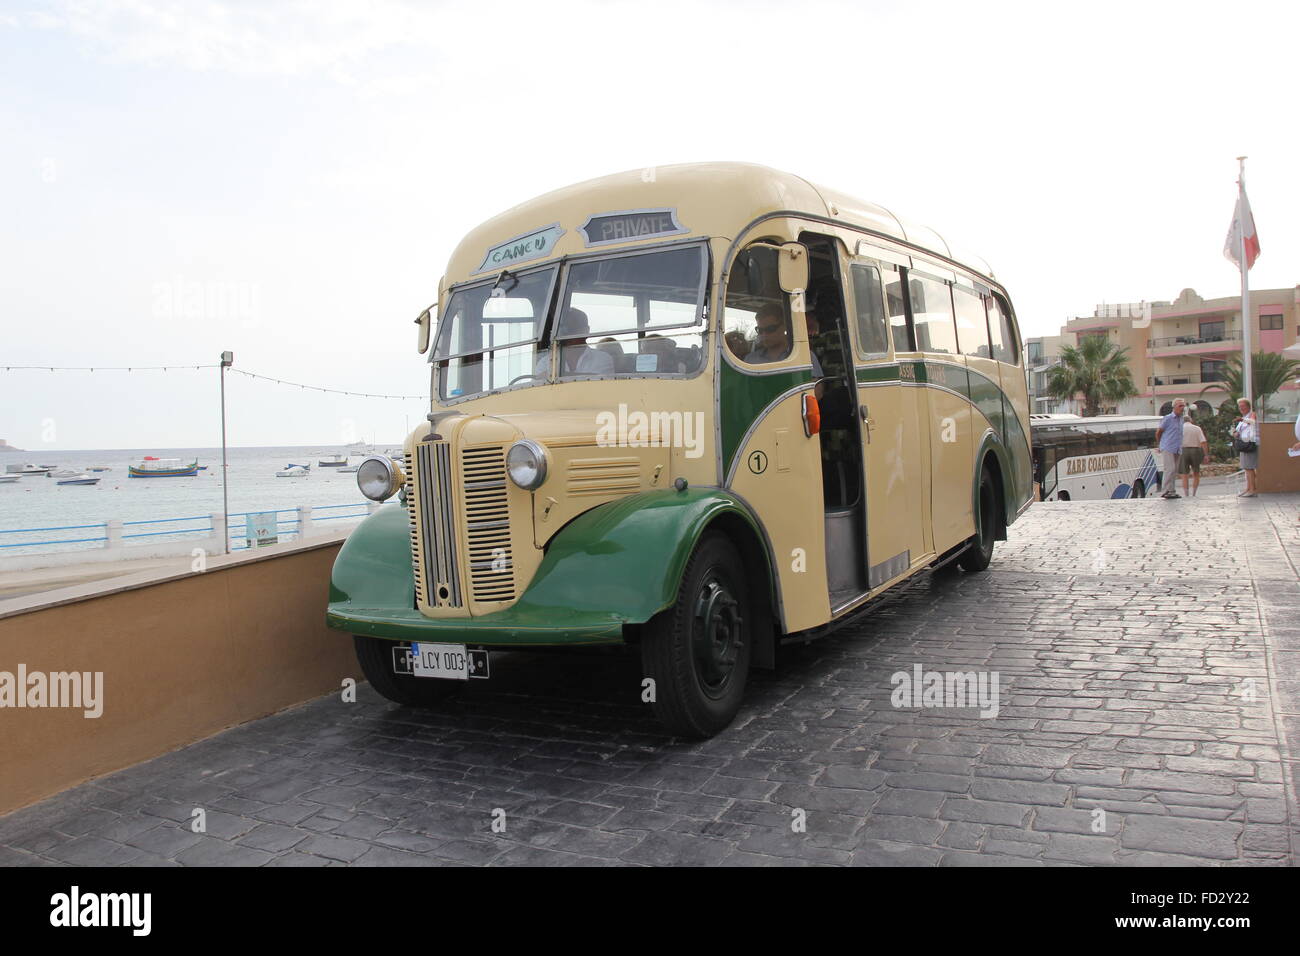 A traditional vintage Malta bus Stock Photo